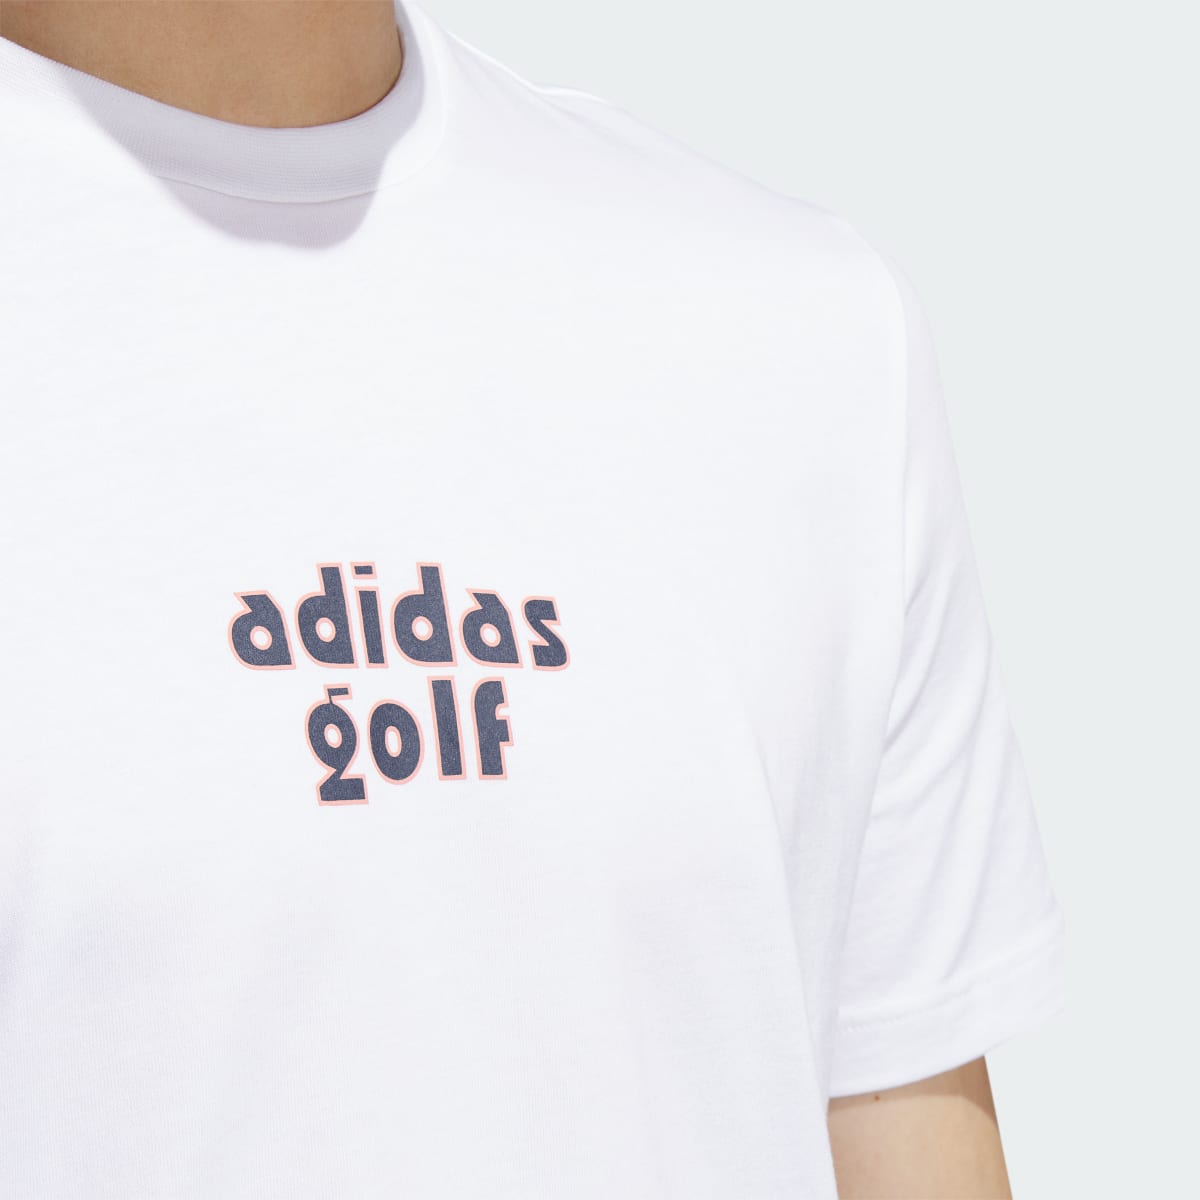 Adidas Golf Graphic Tee. 7